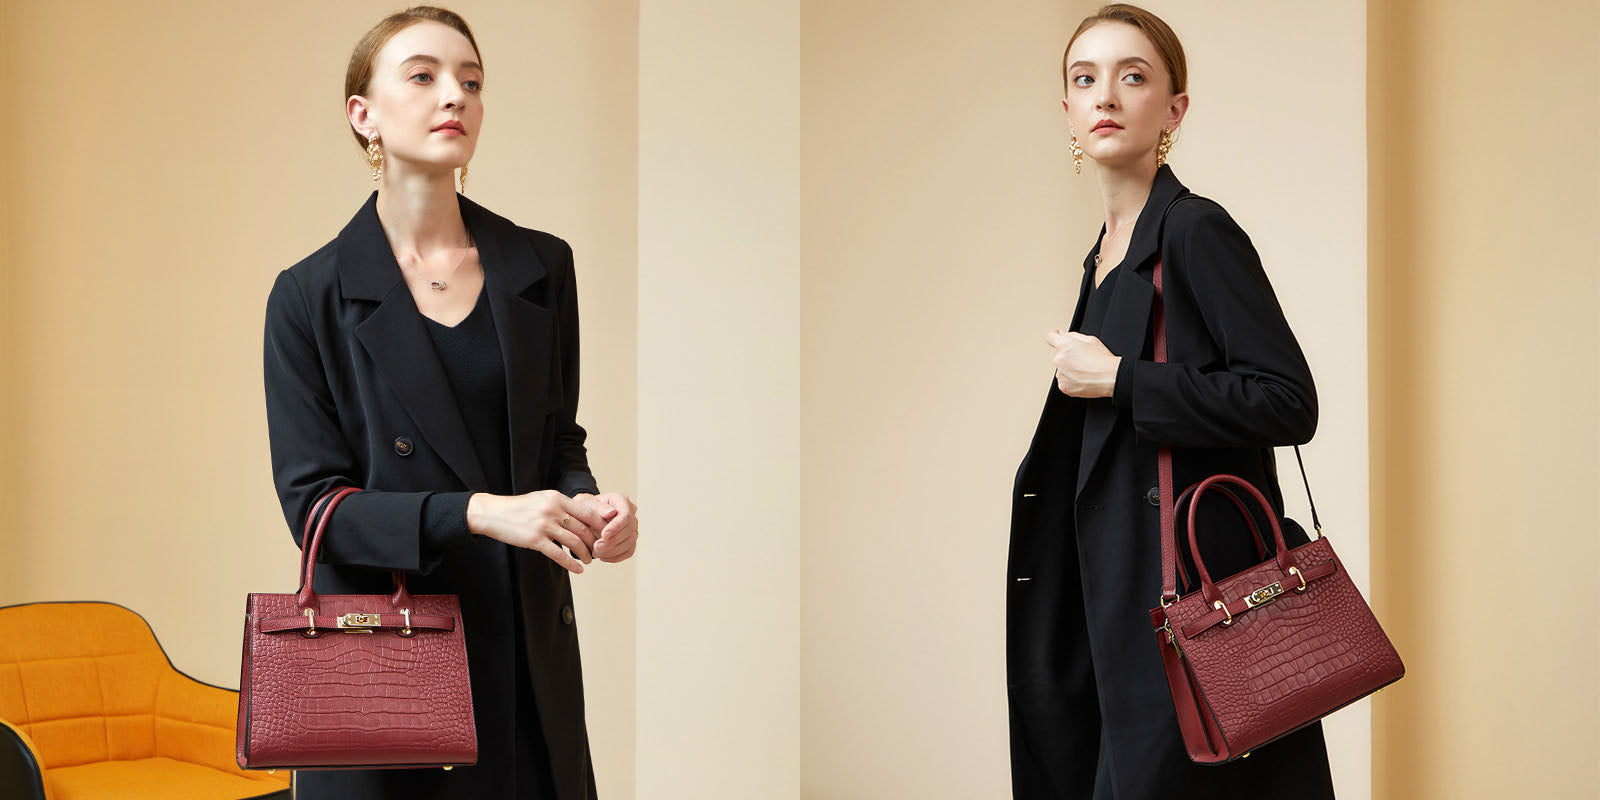 Buy ToLFE Womens Purses and Handbags Shoulder Bags Ladies Designer Top  Handle Satchel Tote Bag (Black) at Amazon.in